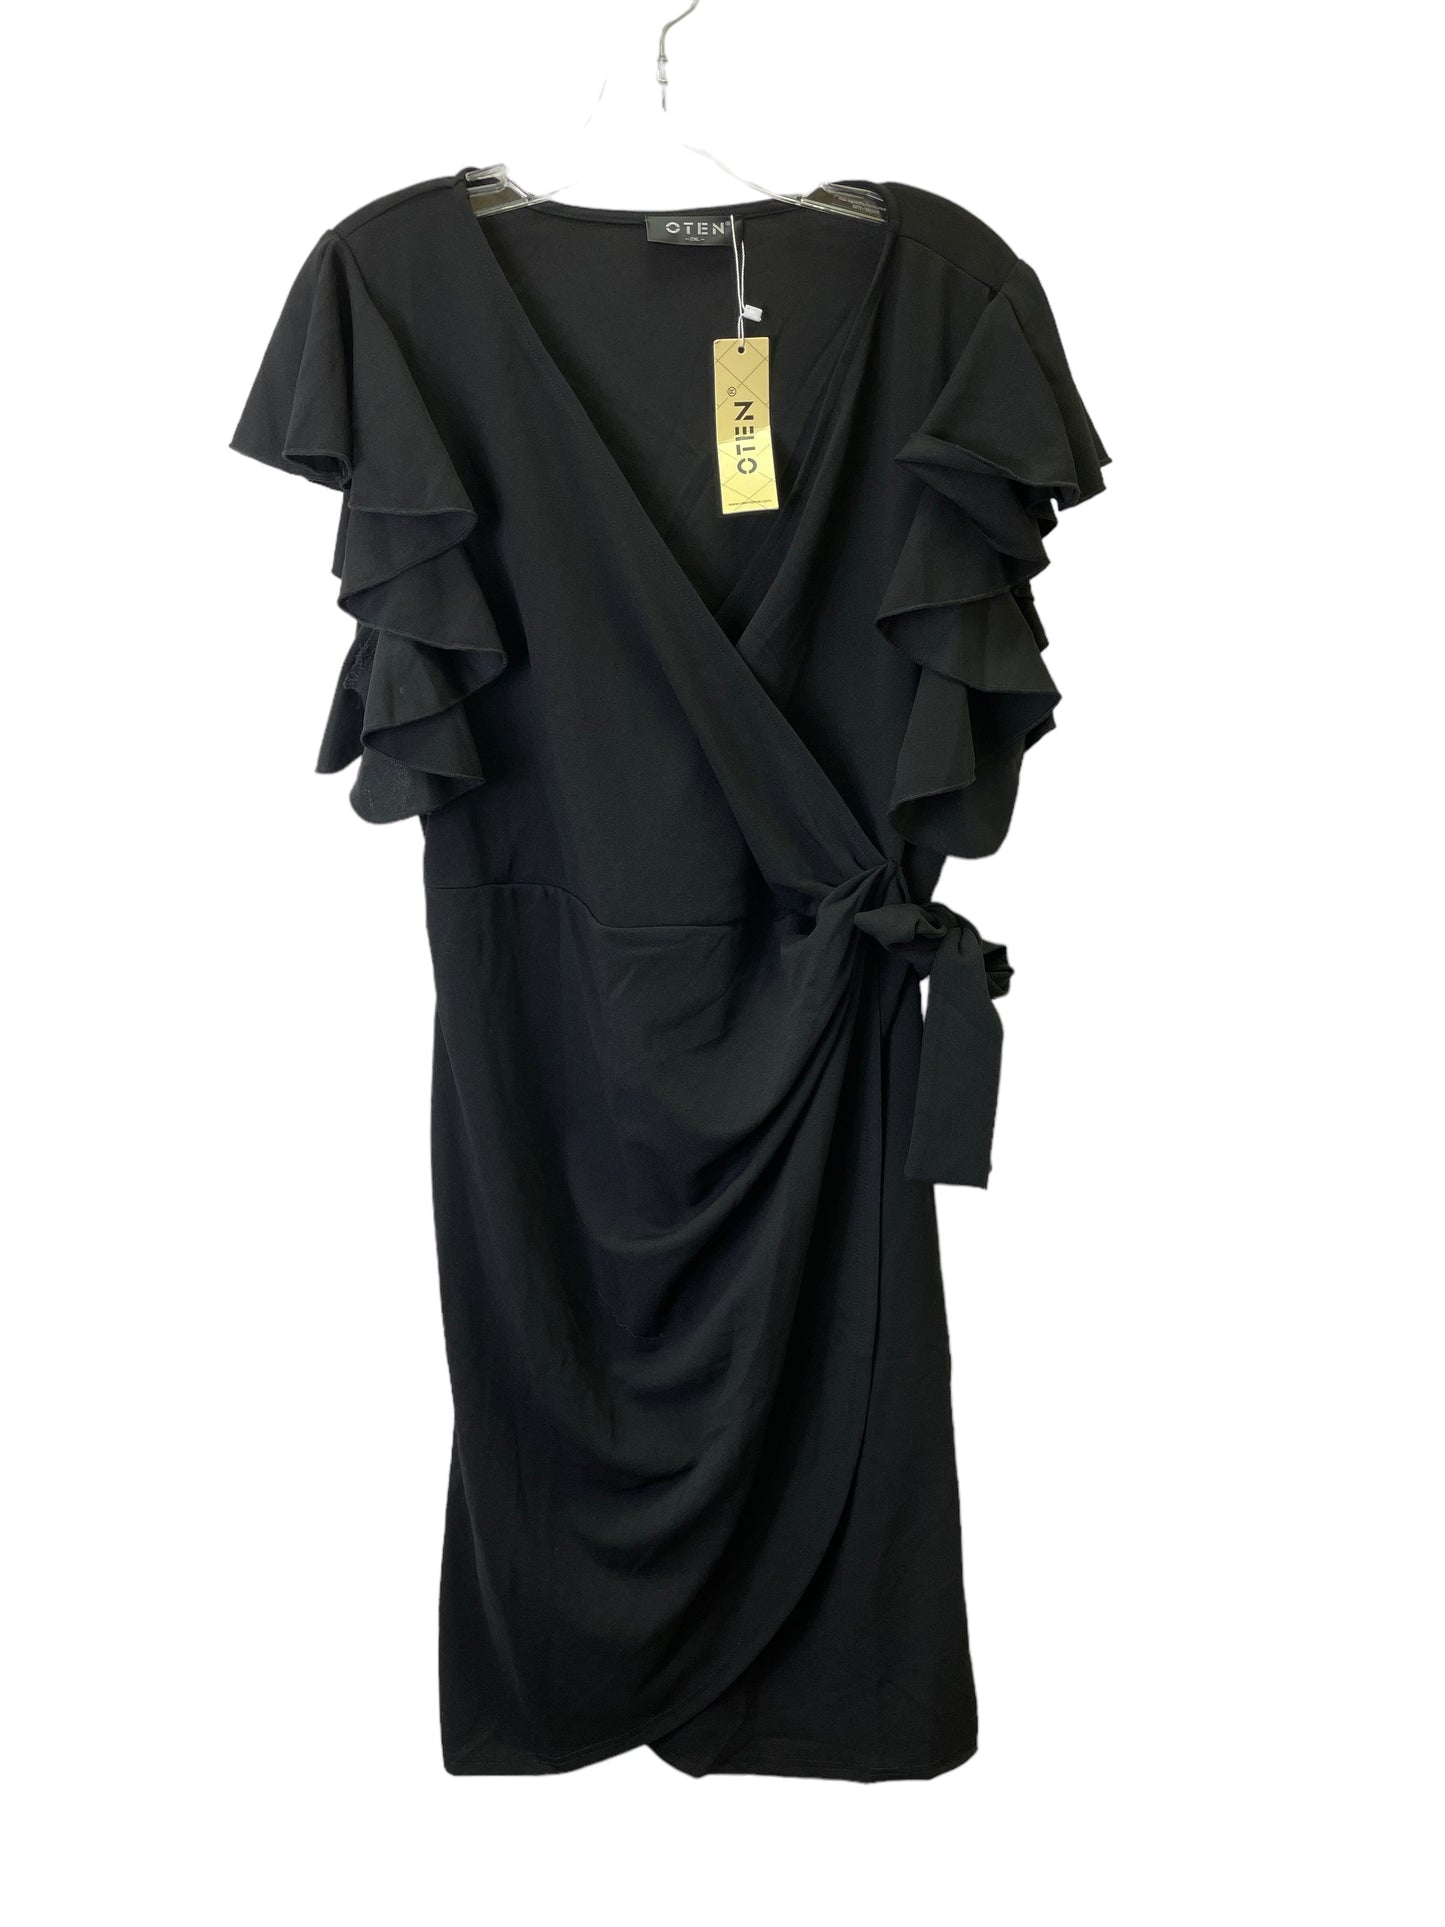 Black Dress Casual Midi By Cme, Size: 2x